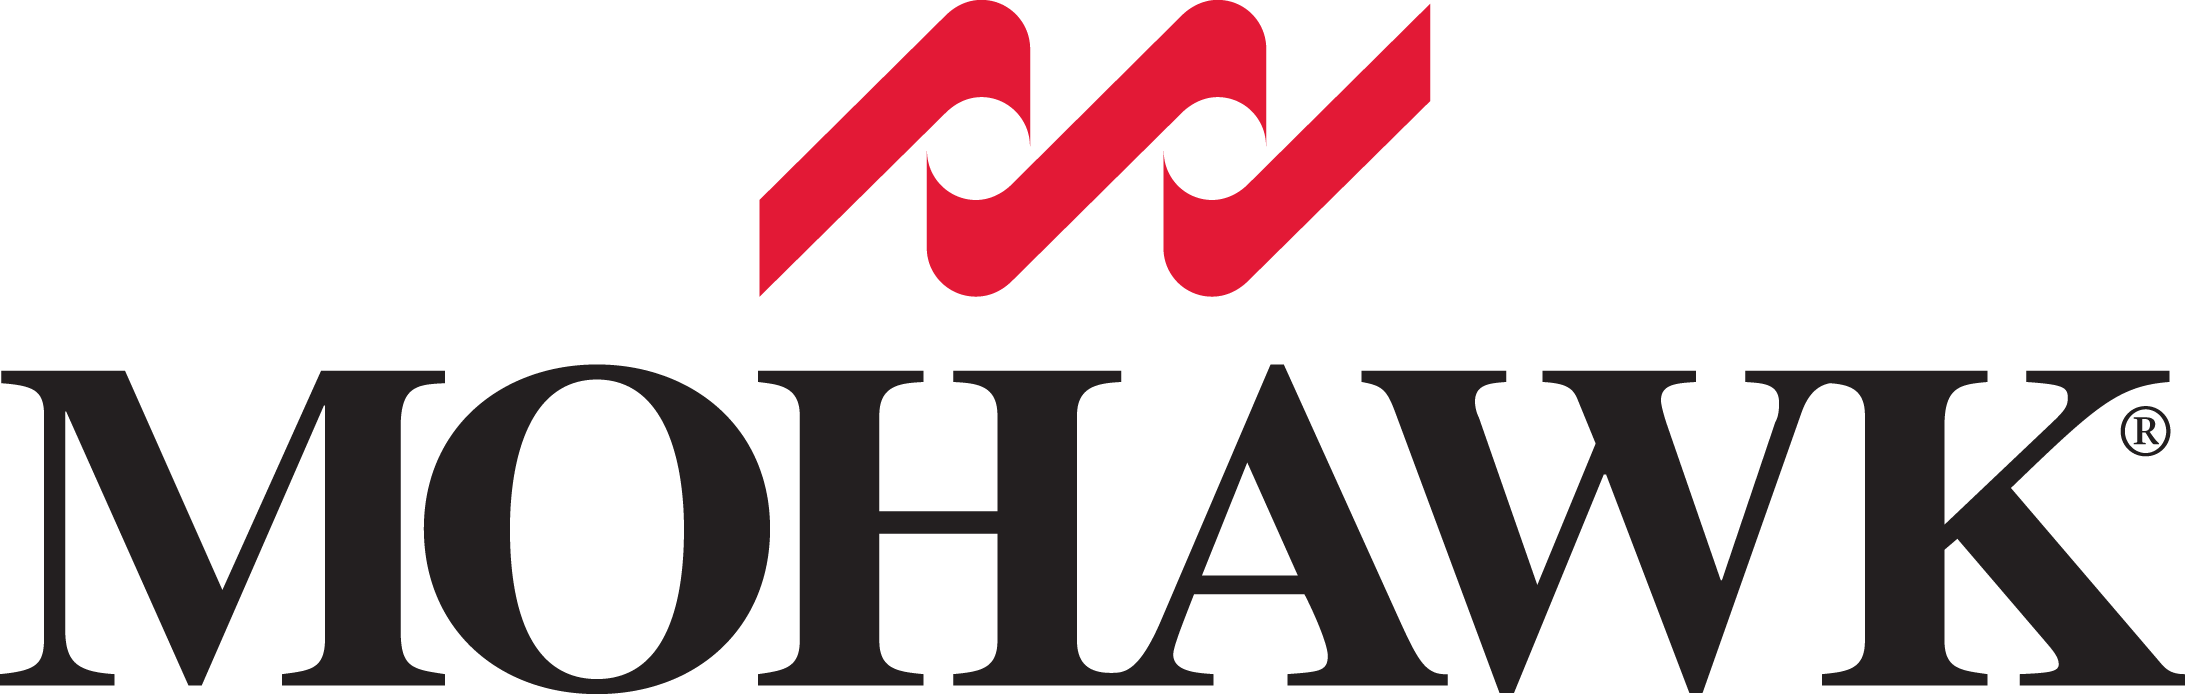 image-786002-Mohawk-Logo.png